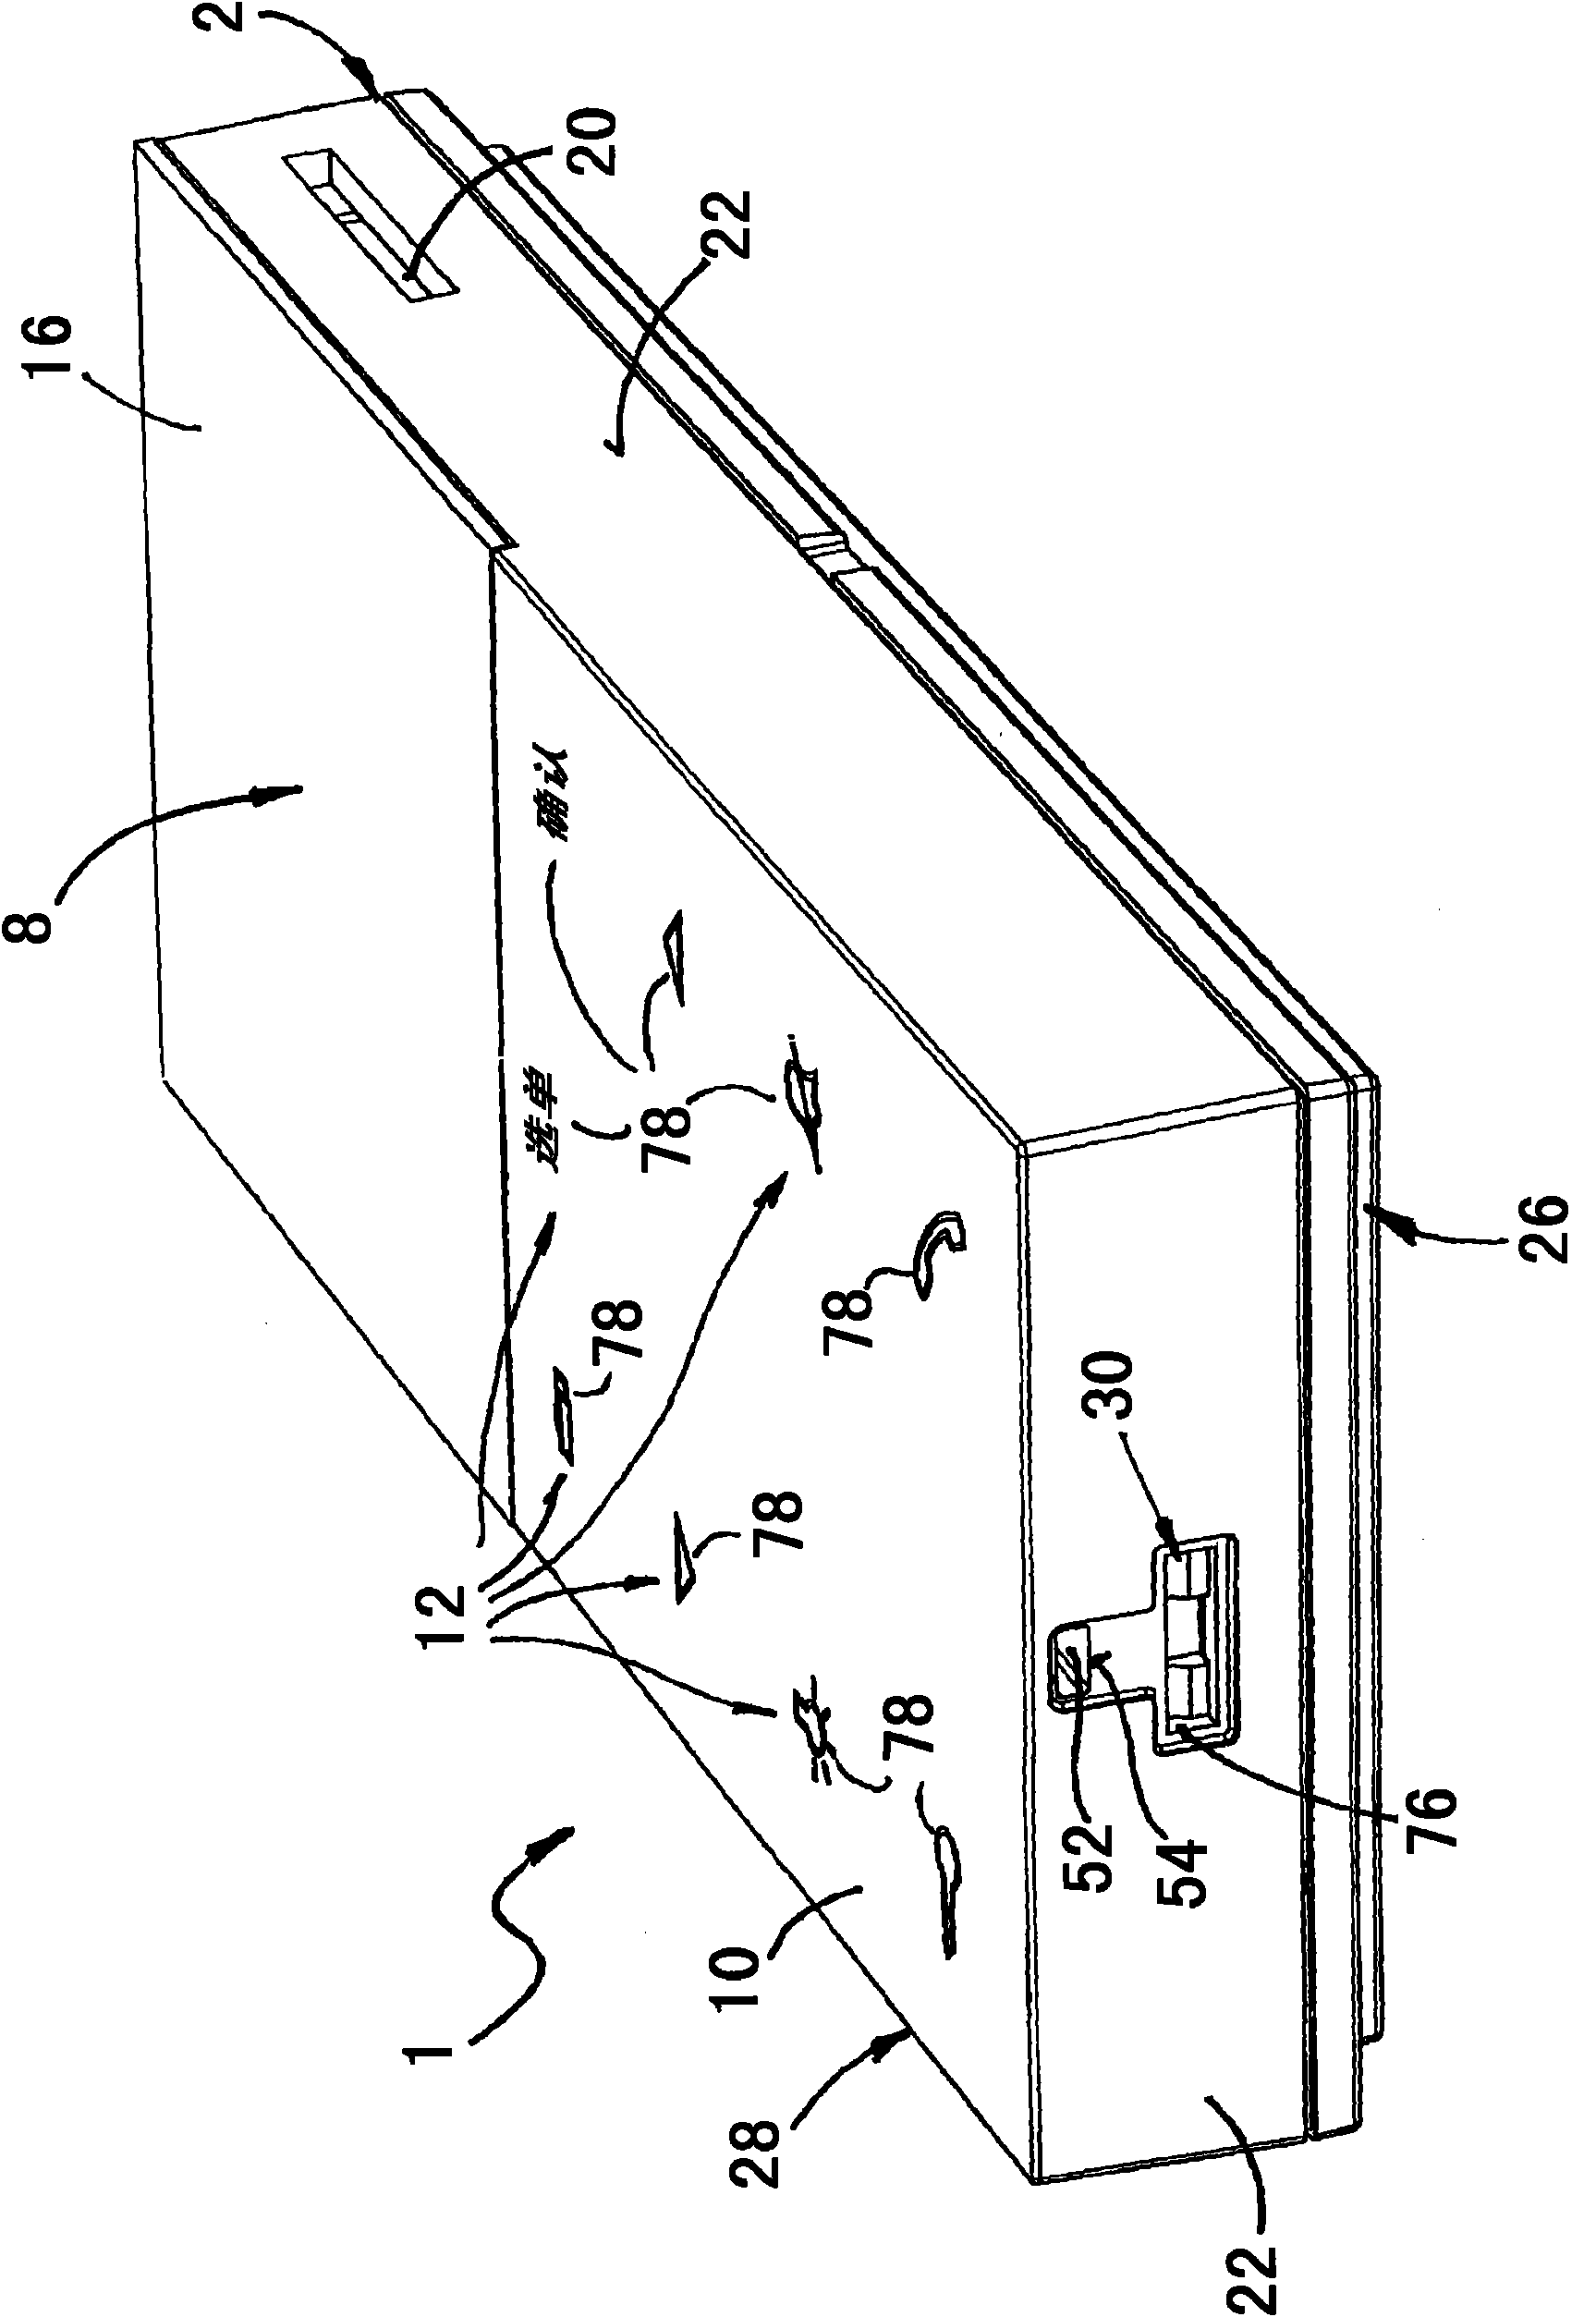 Stationary device for a house intercom system